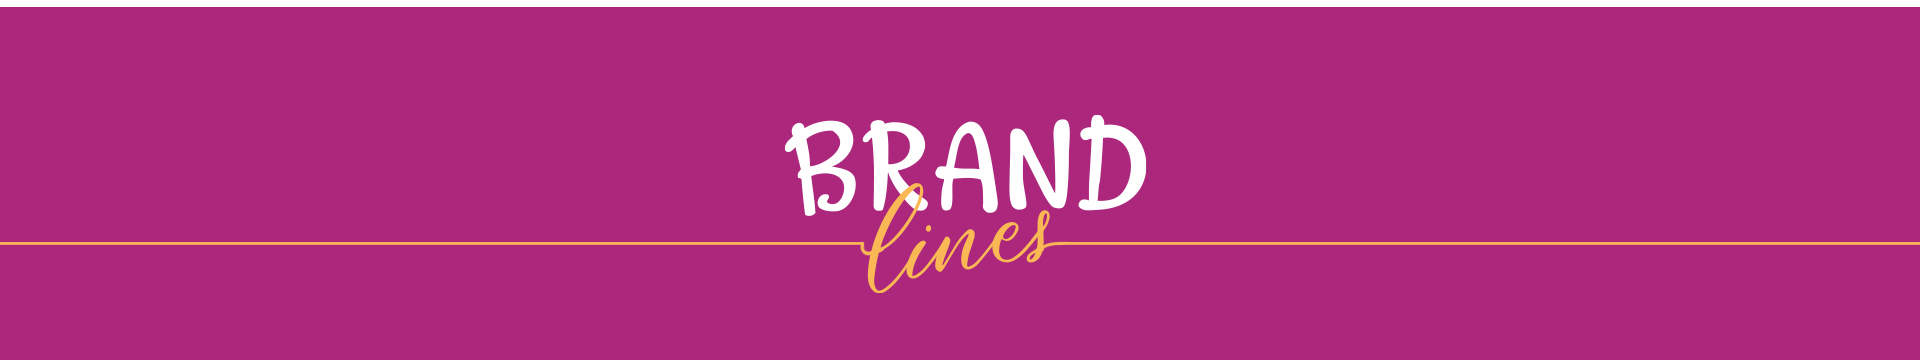 Brand lines